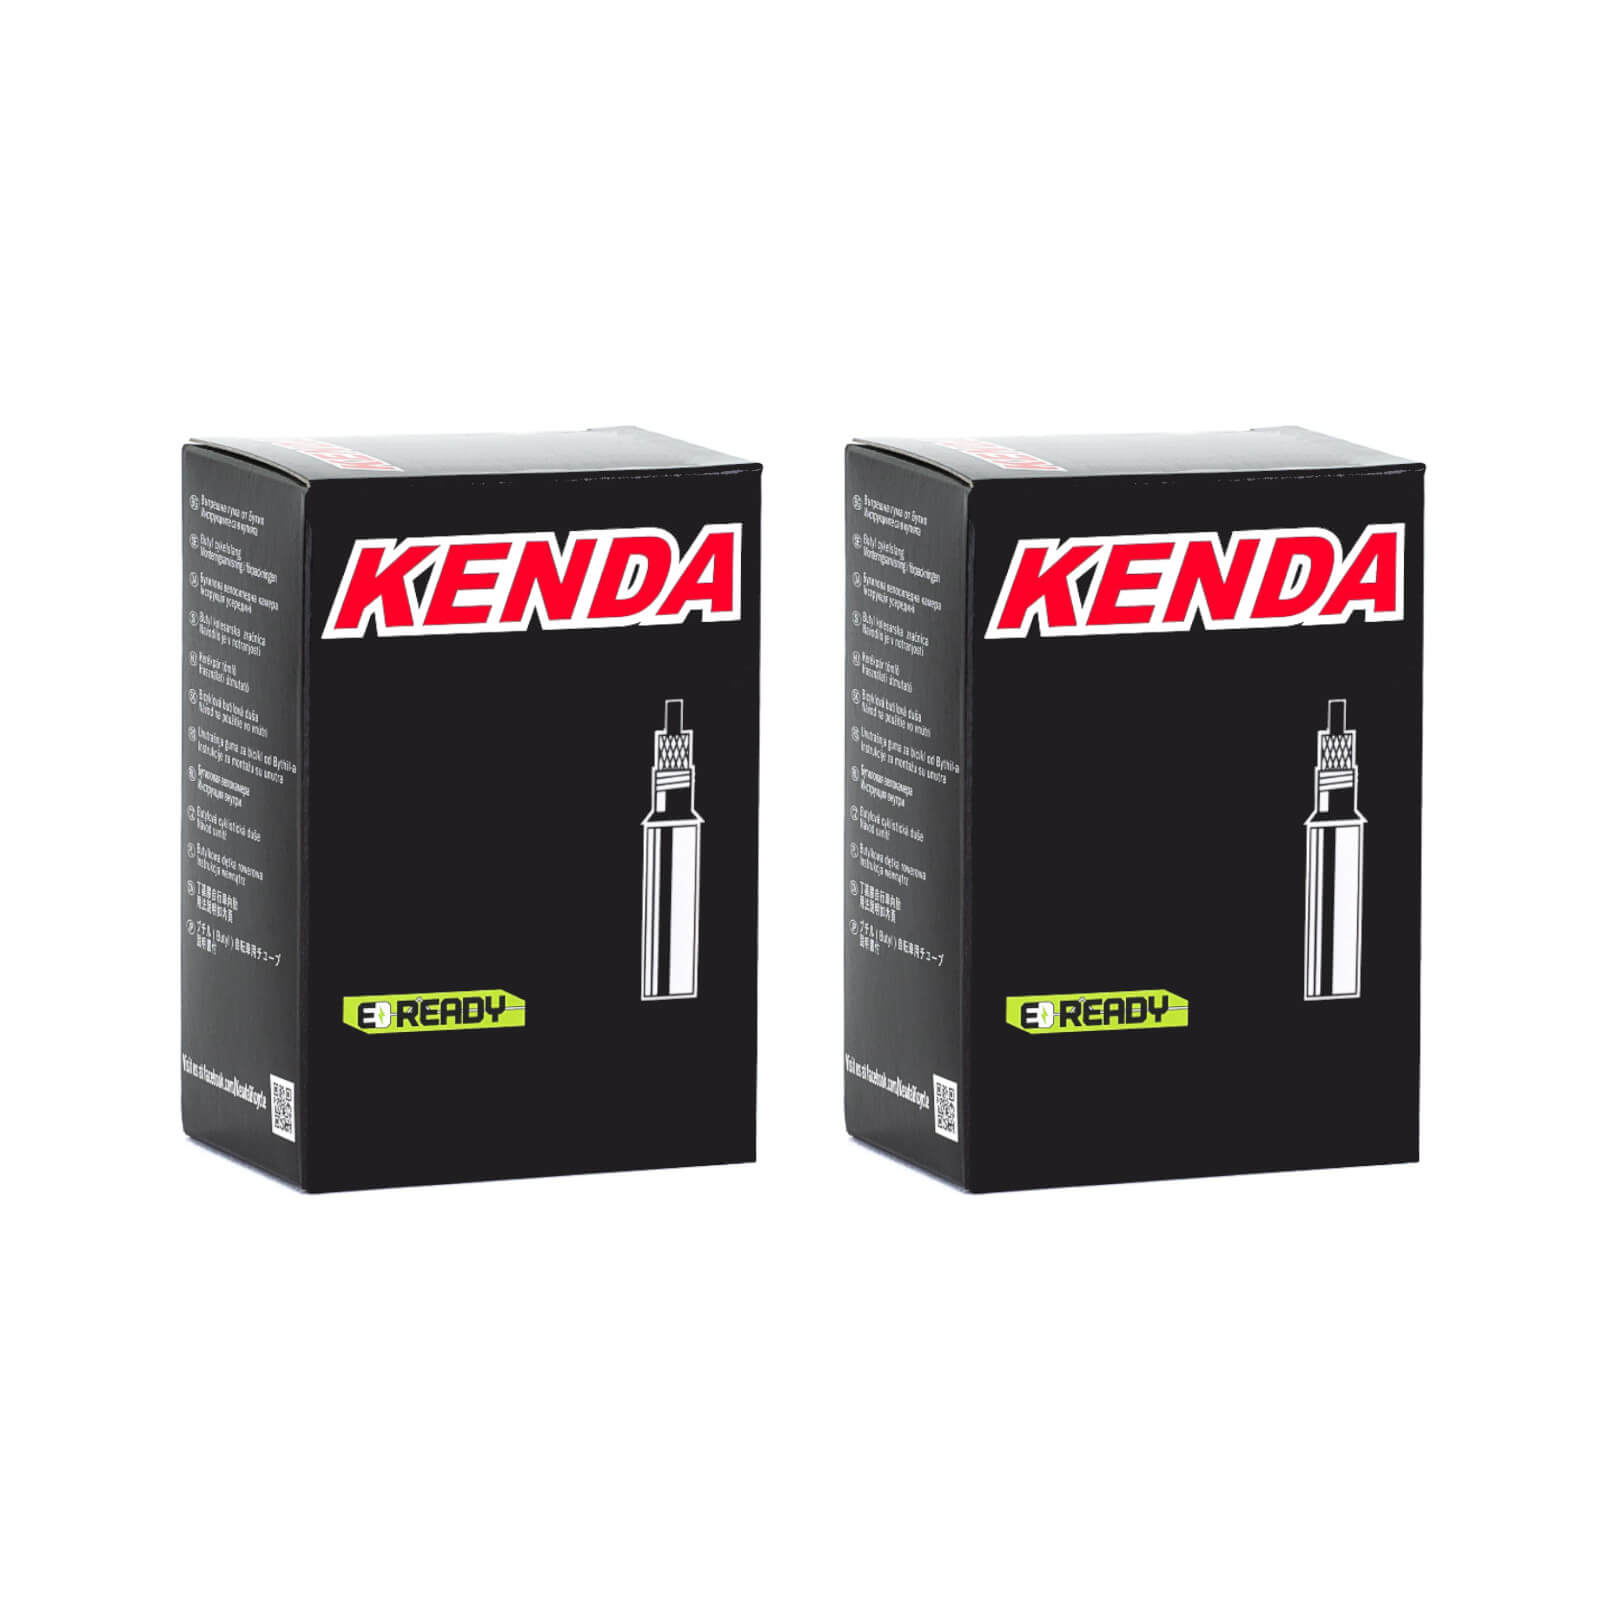 Kenda 27.5x2.4-2.8" Removable Core 27.5 Inch Presta Valve Bike Inner Tube Pack of 2